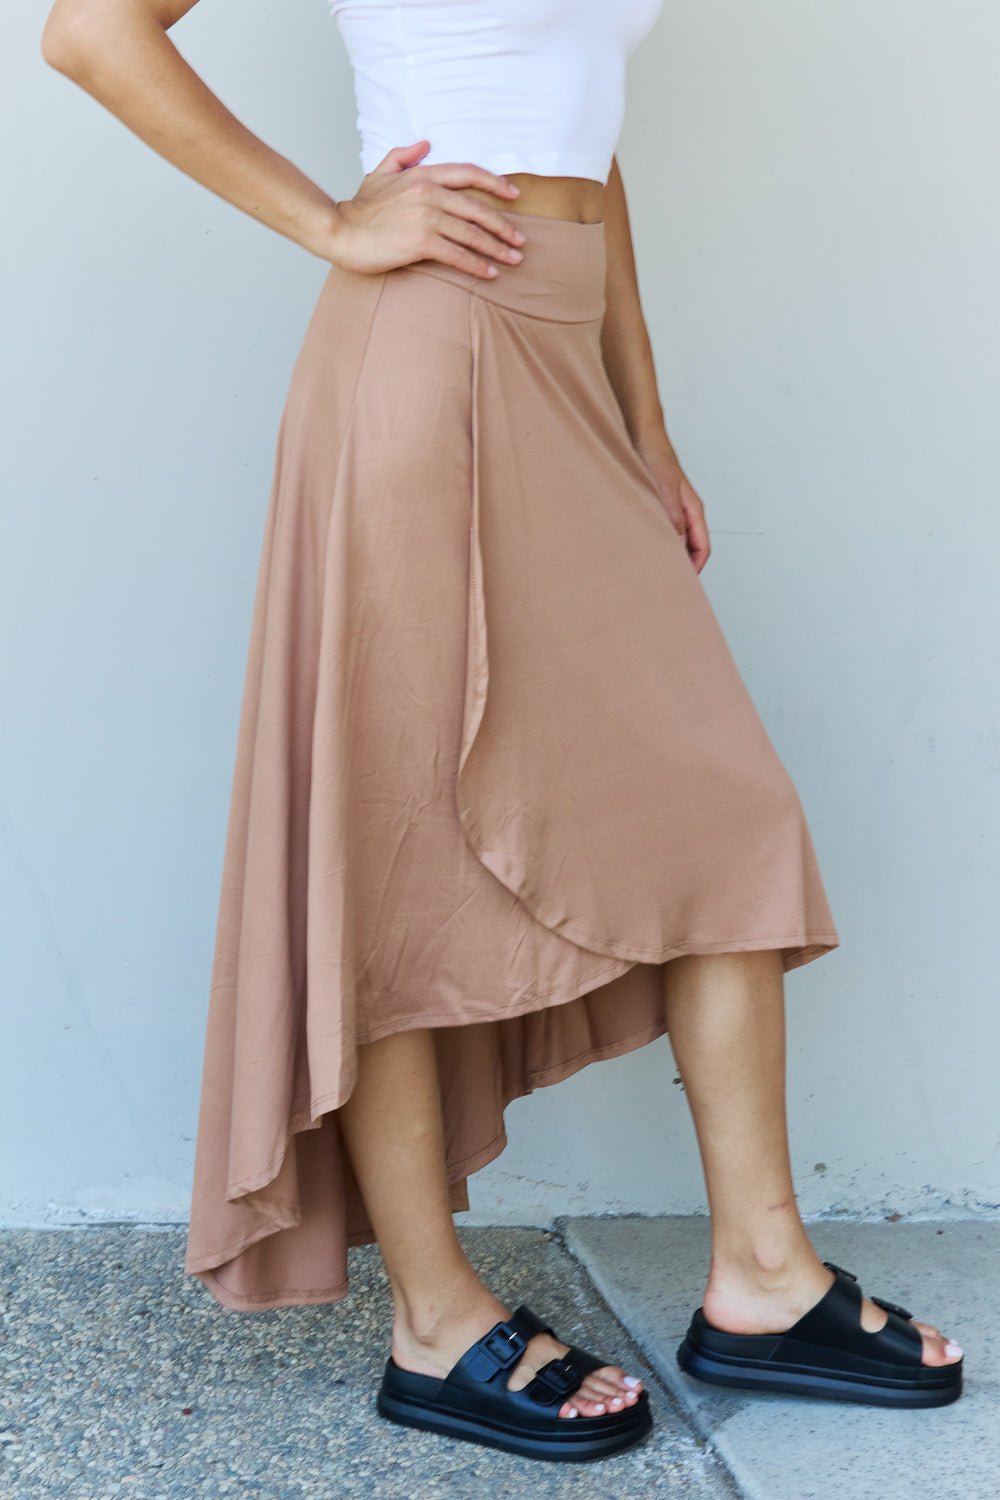 Ninexis First Choice High Waisted Flare Maxi Skirt in Camel - Tigbul's Fashion